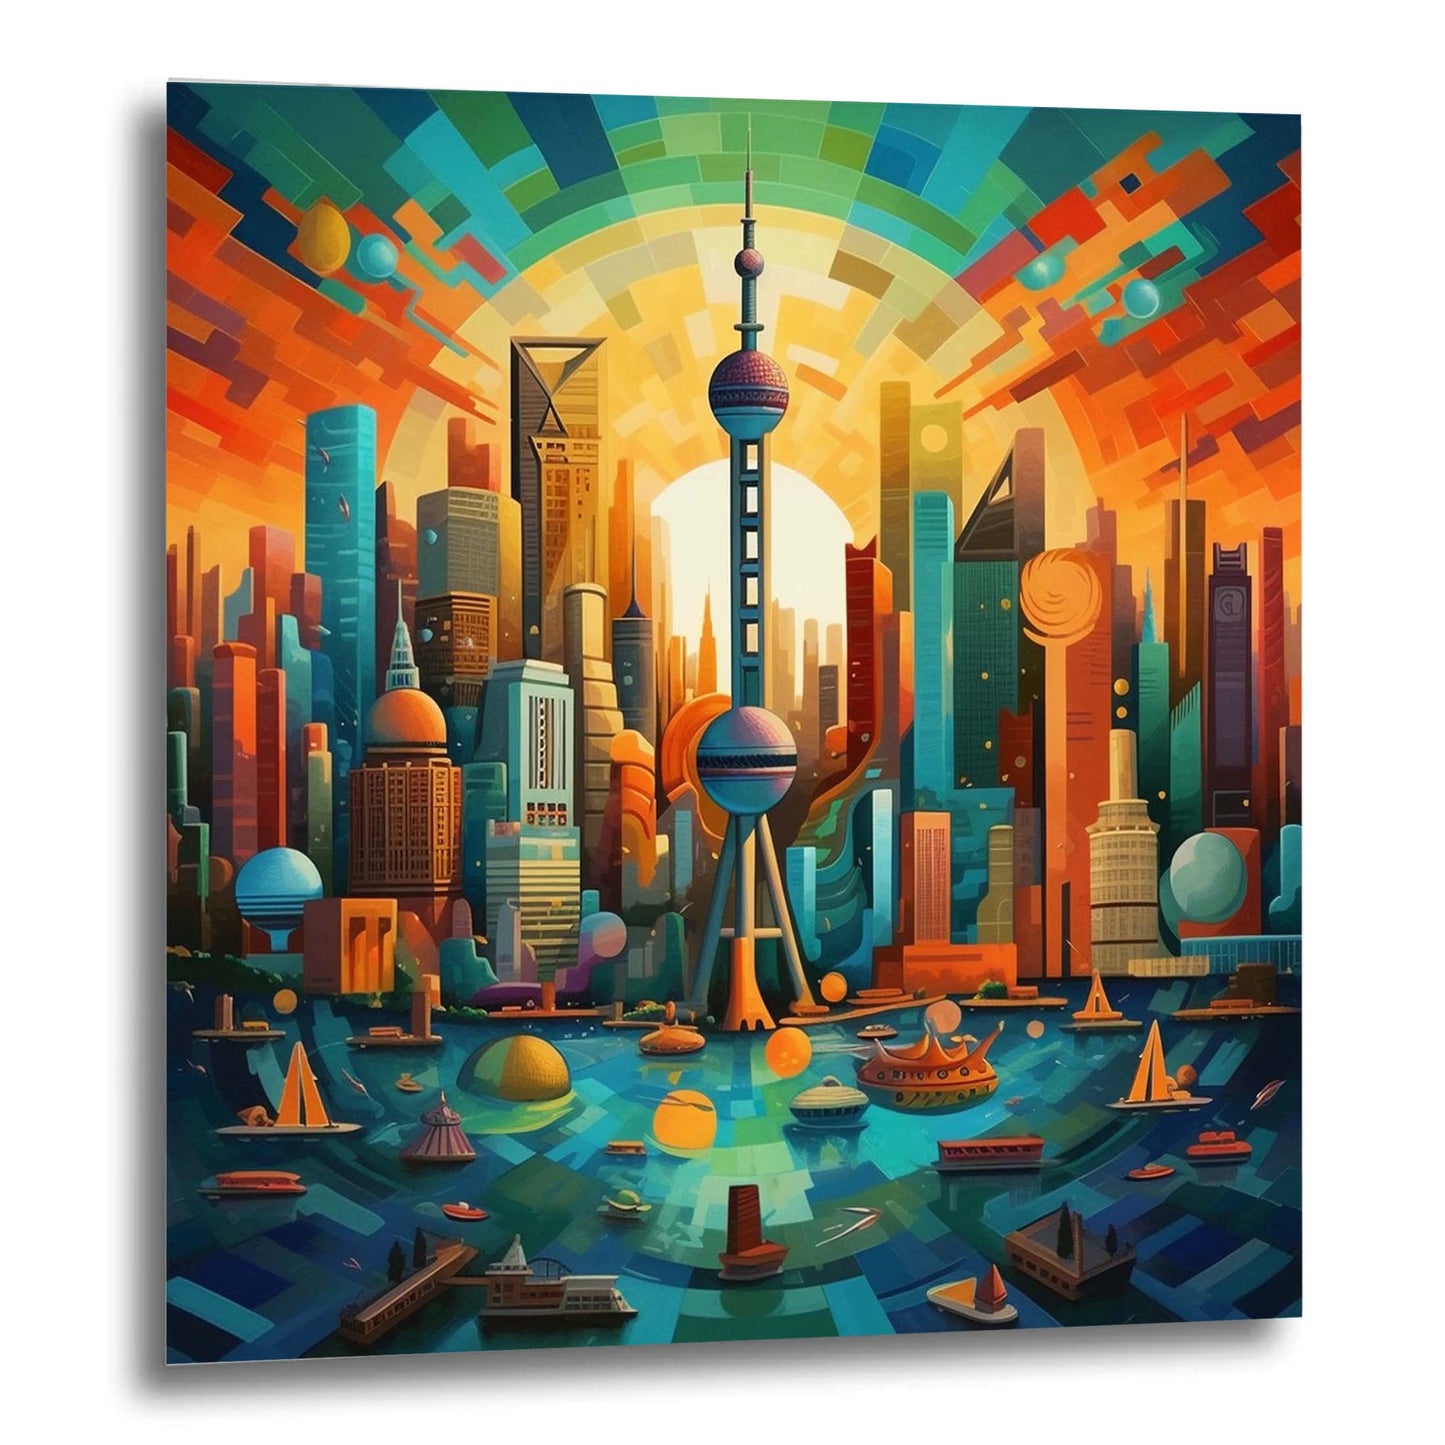 Shanghai skyline mural in futurism style